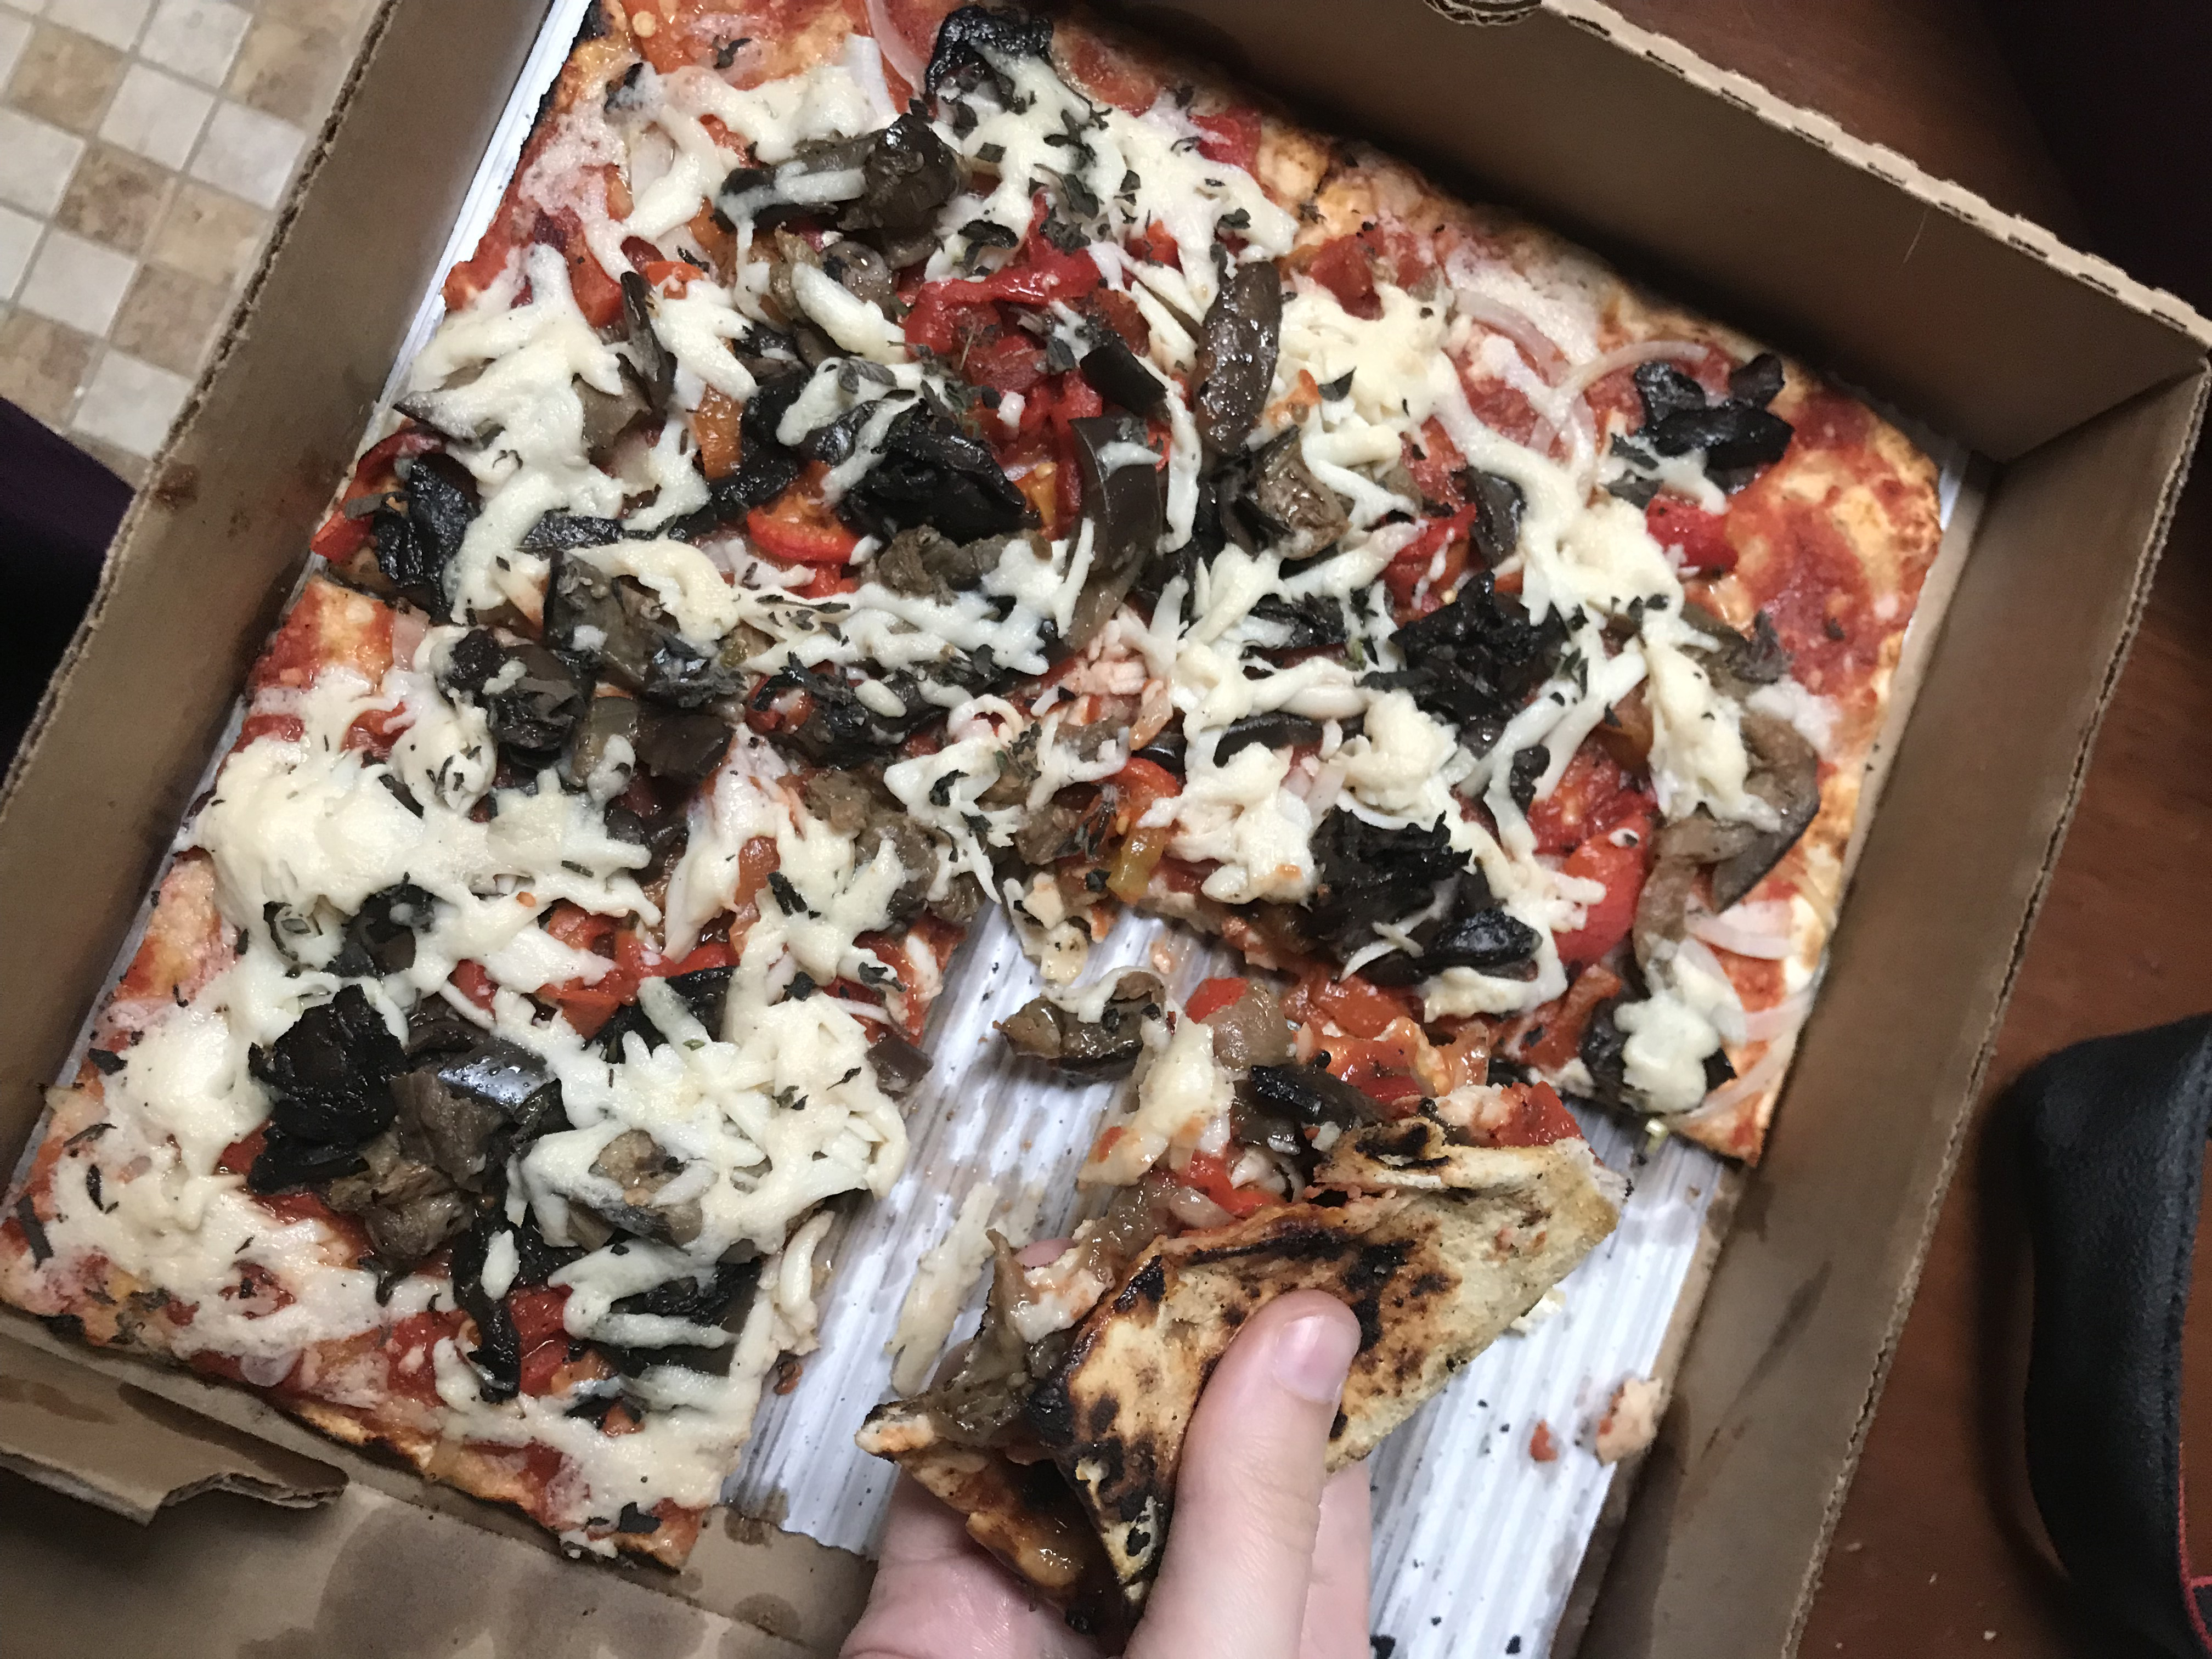 Vegan pizza by Joe Squared